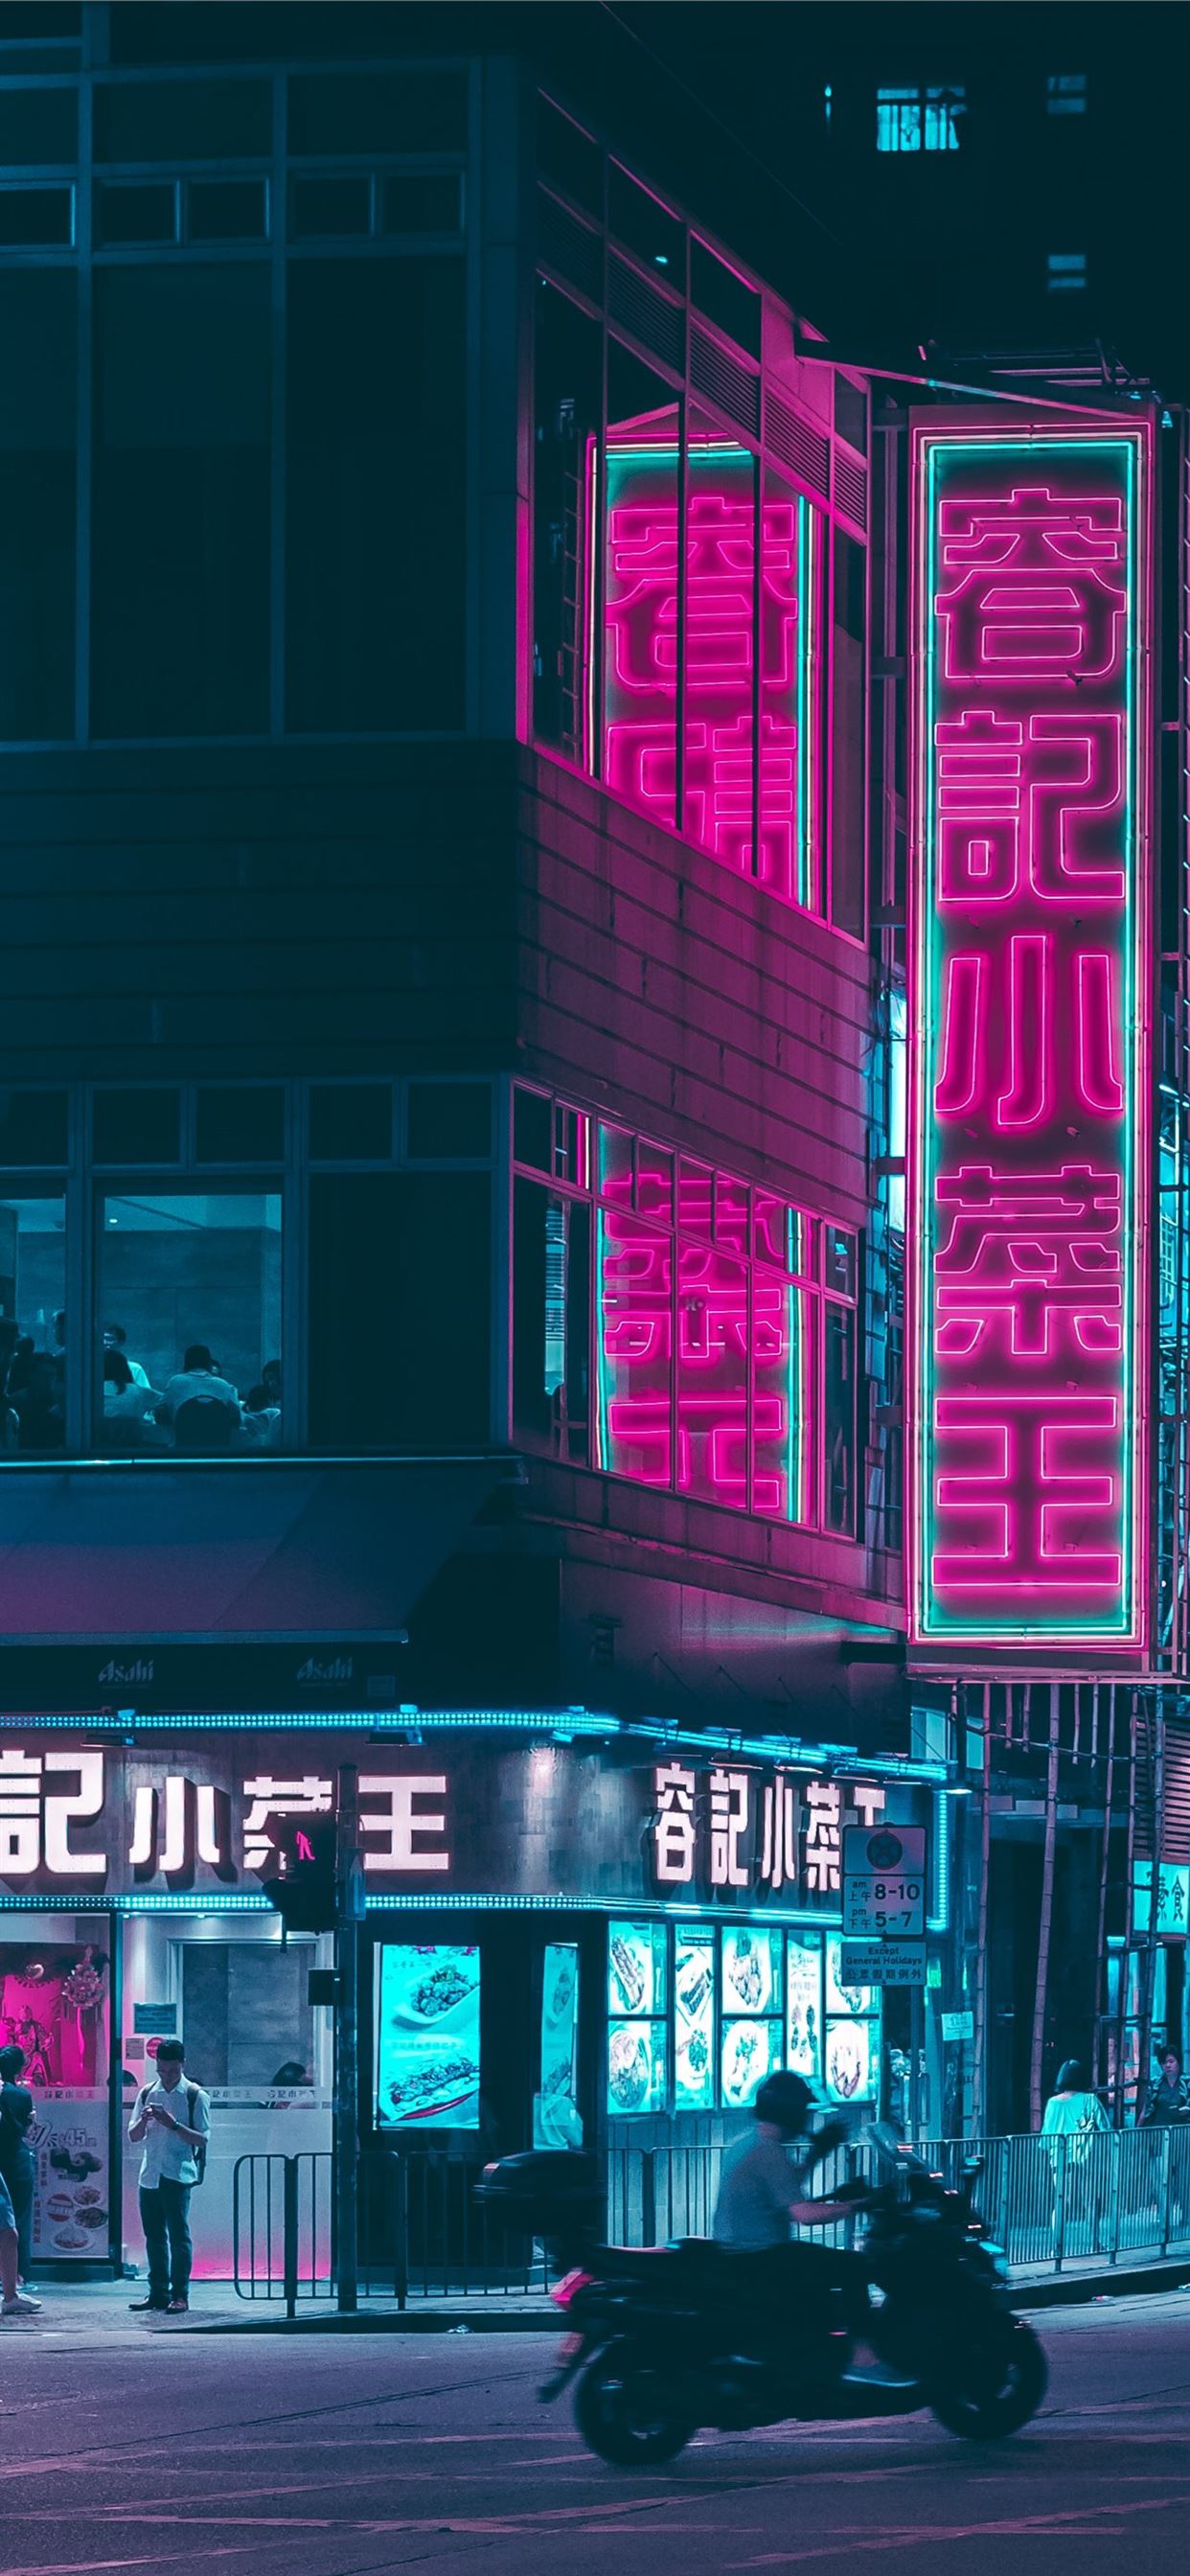 A neon-lit city street at night - Cyan